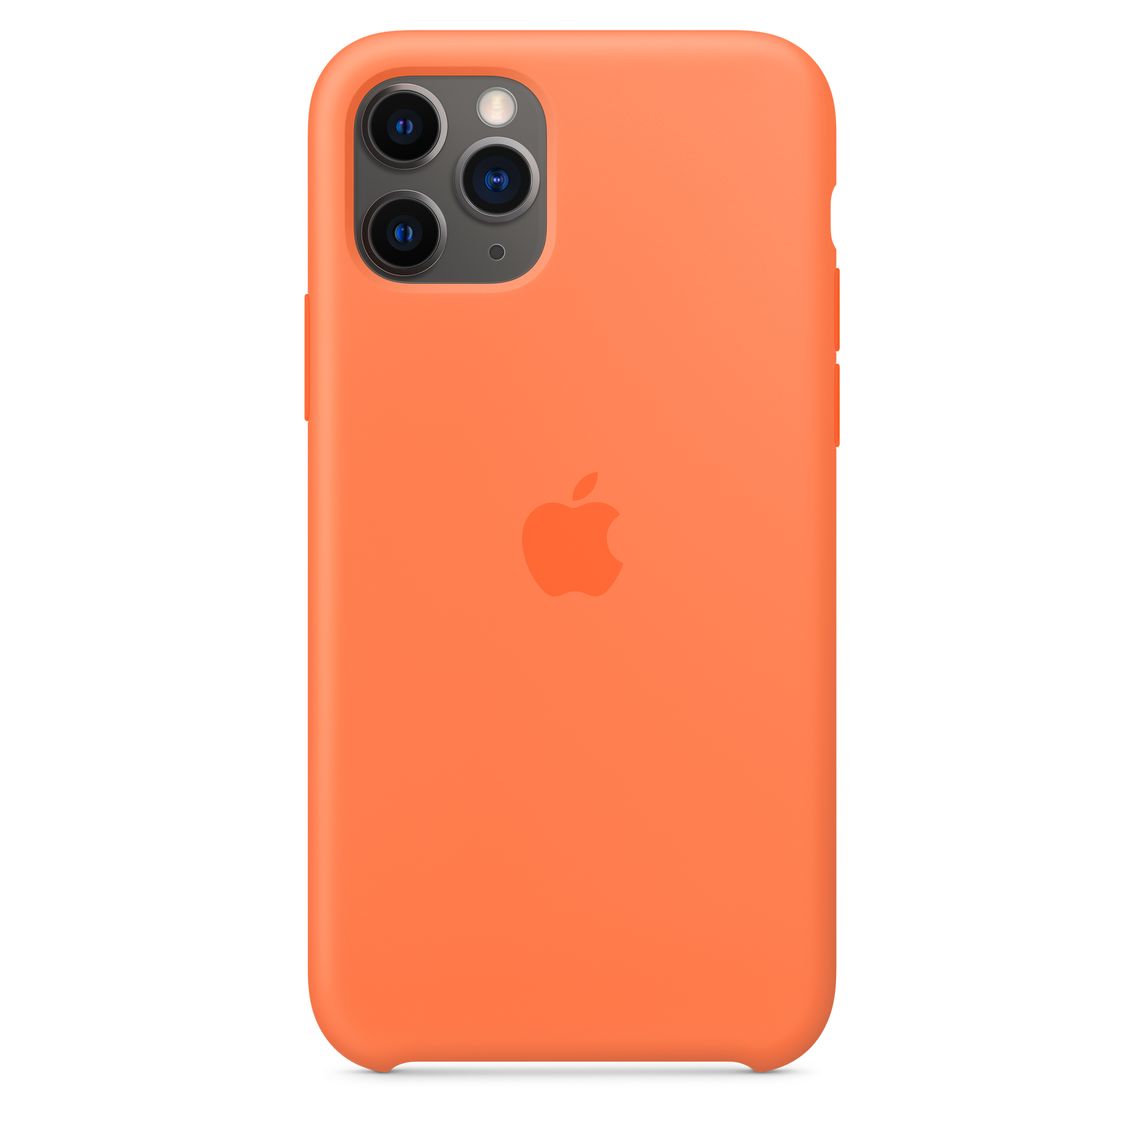 Silicone case iPhone 11 Pro Max